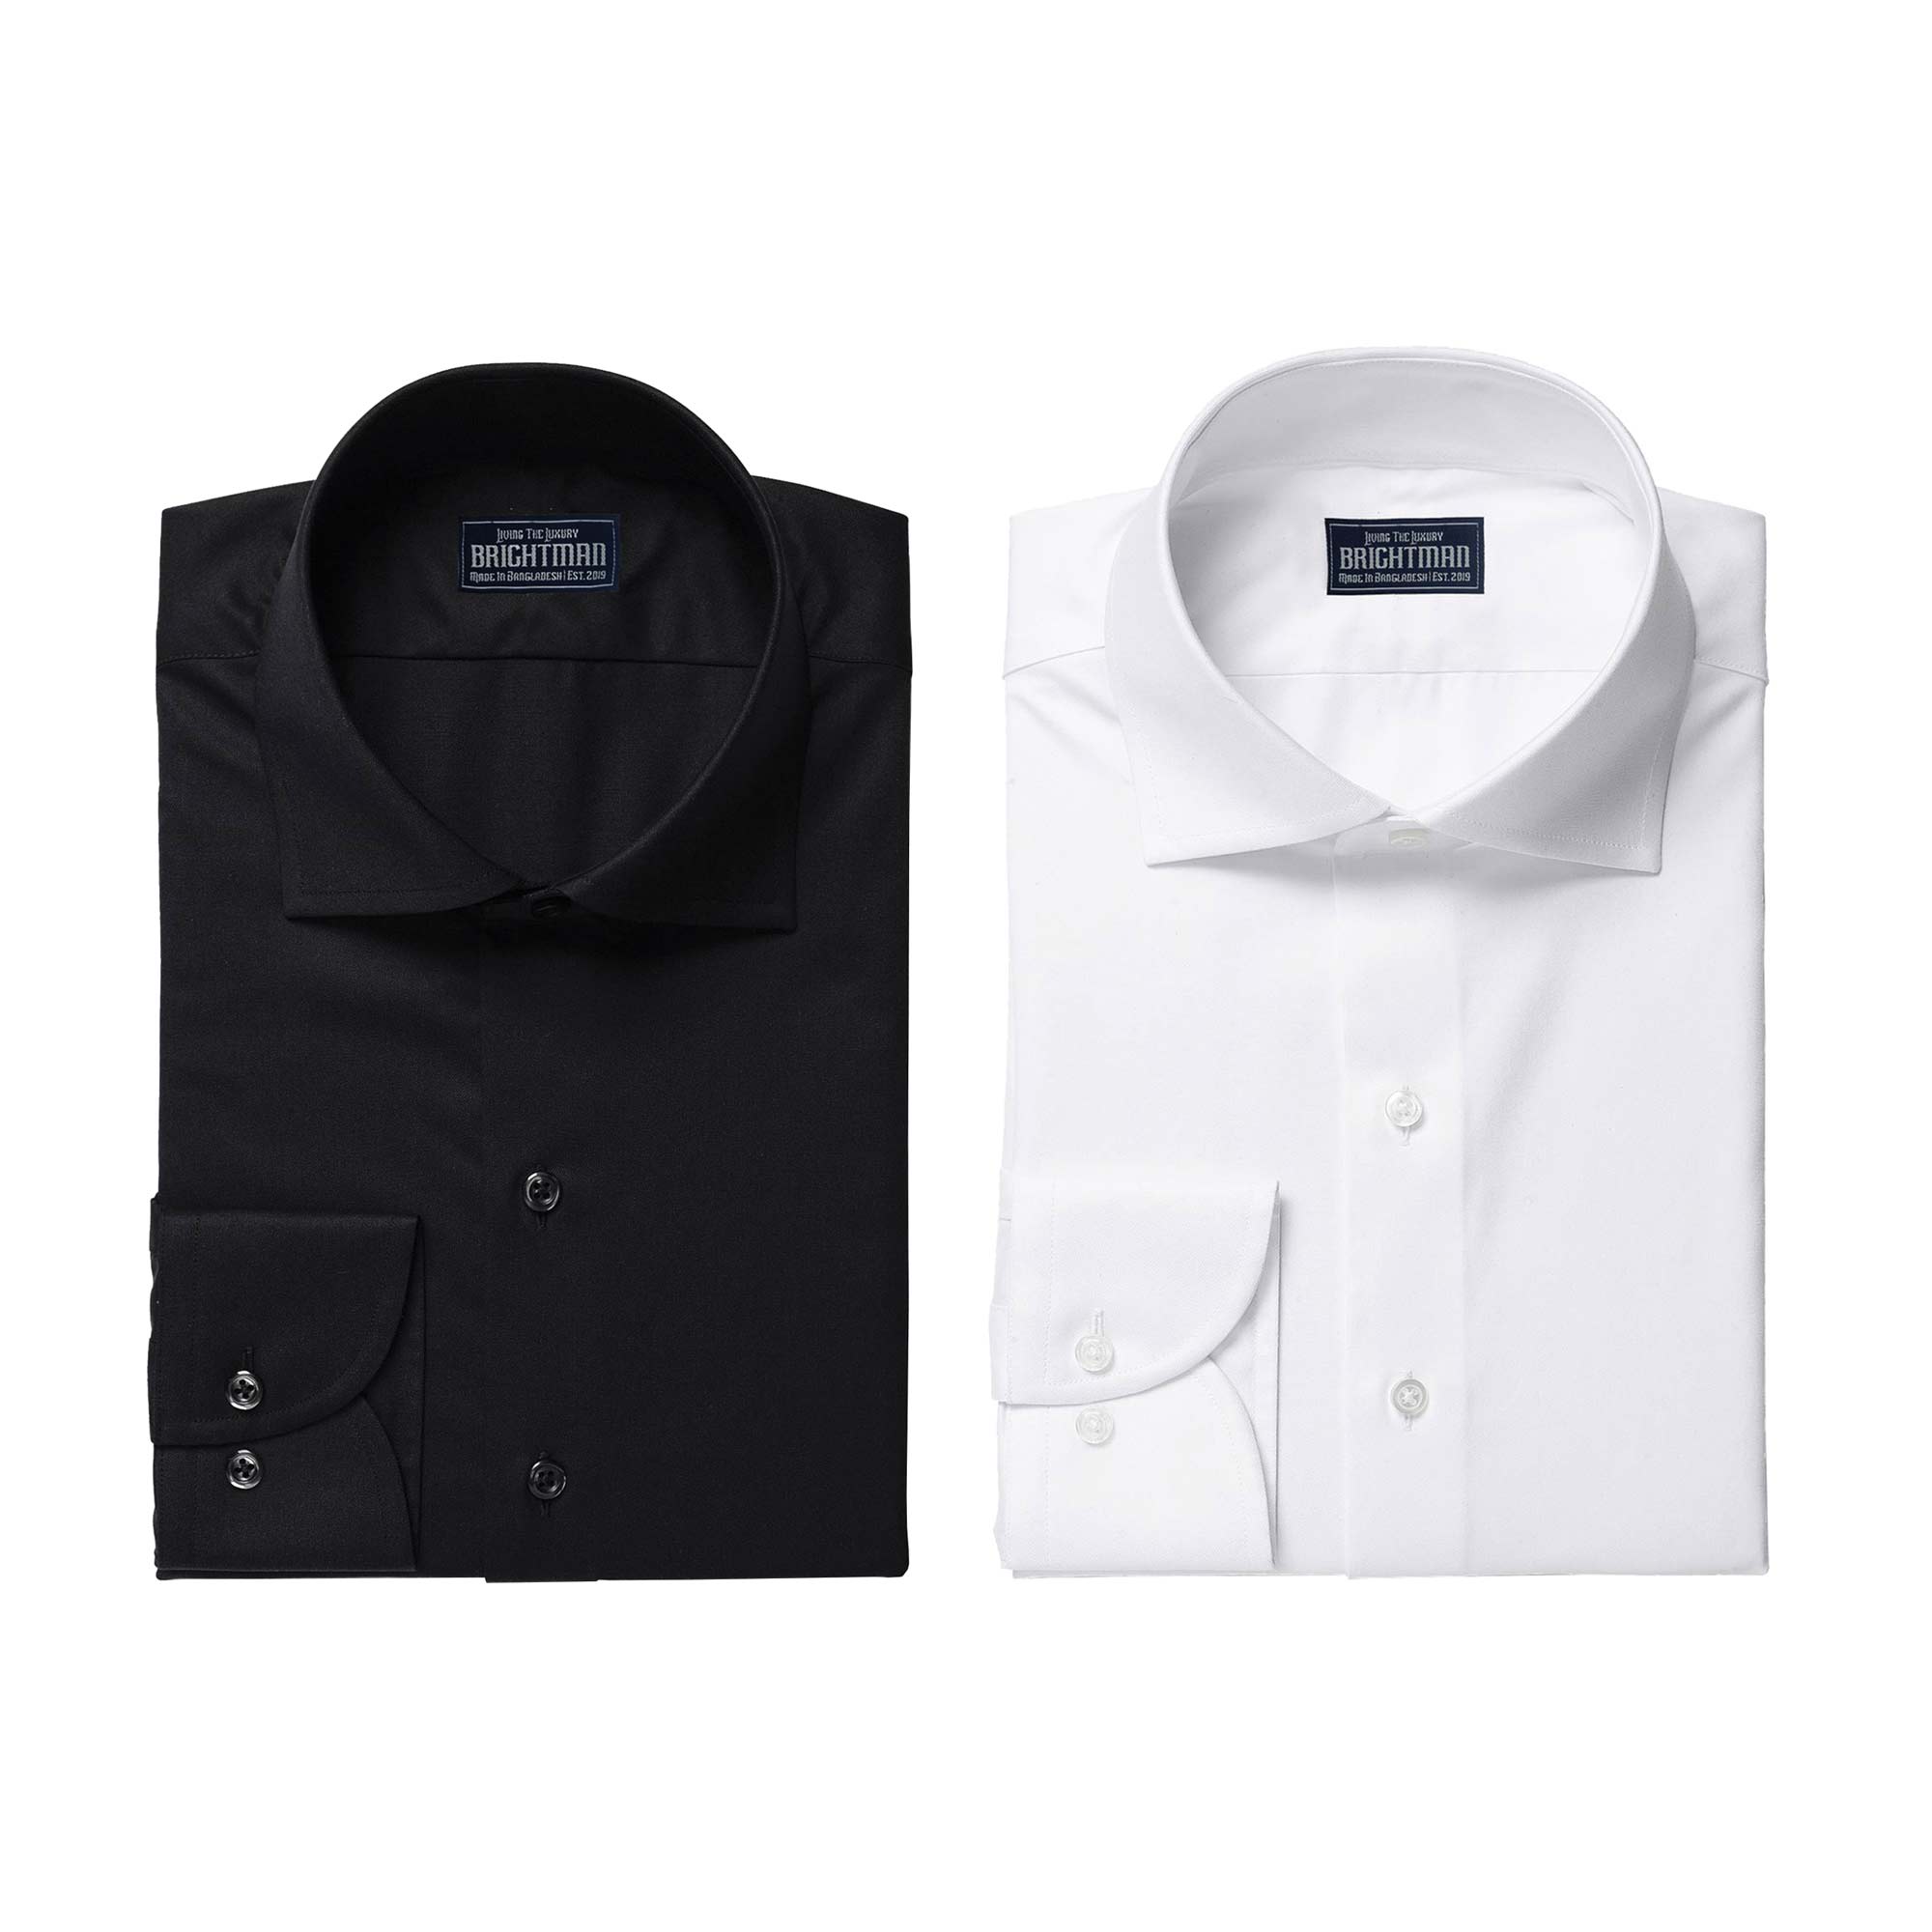 Solid white shirt & black shirt combo